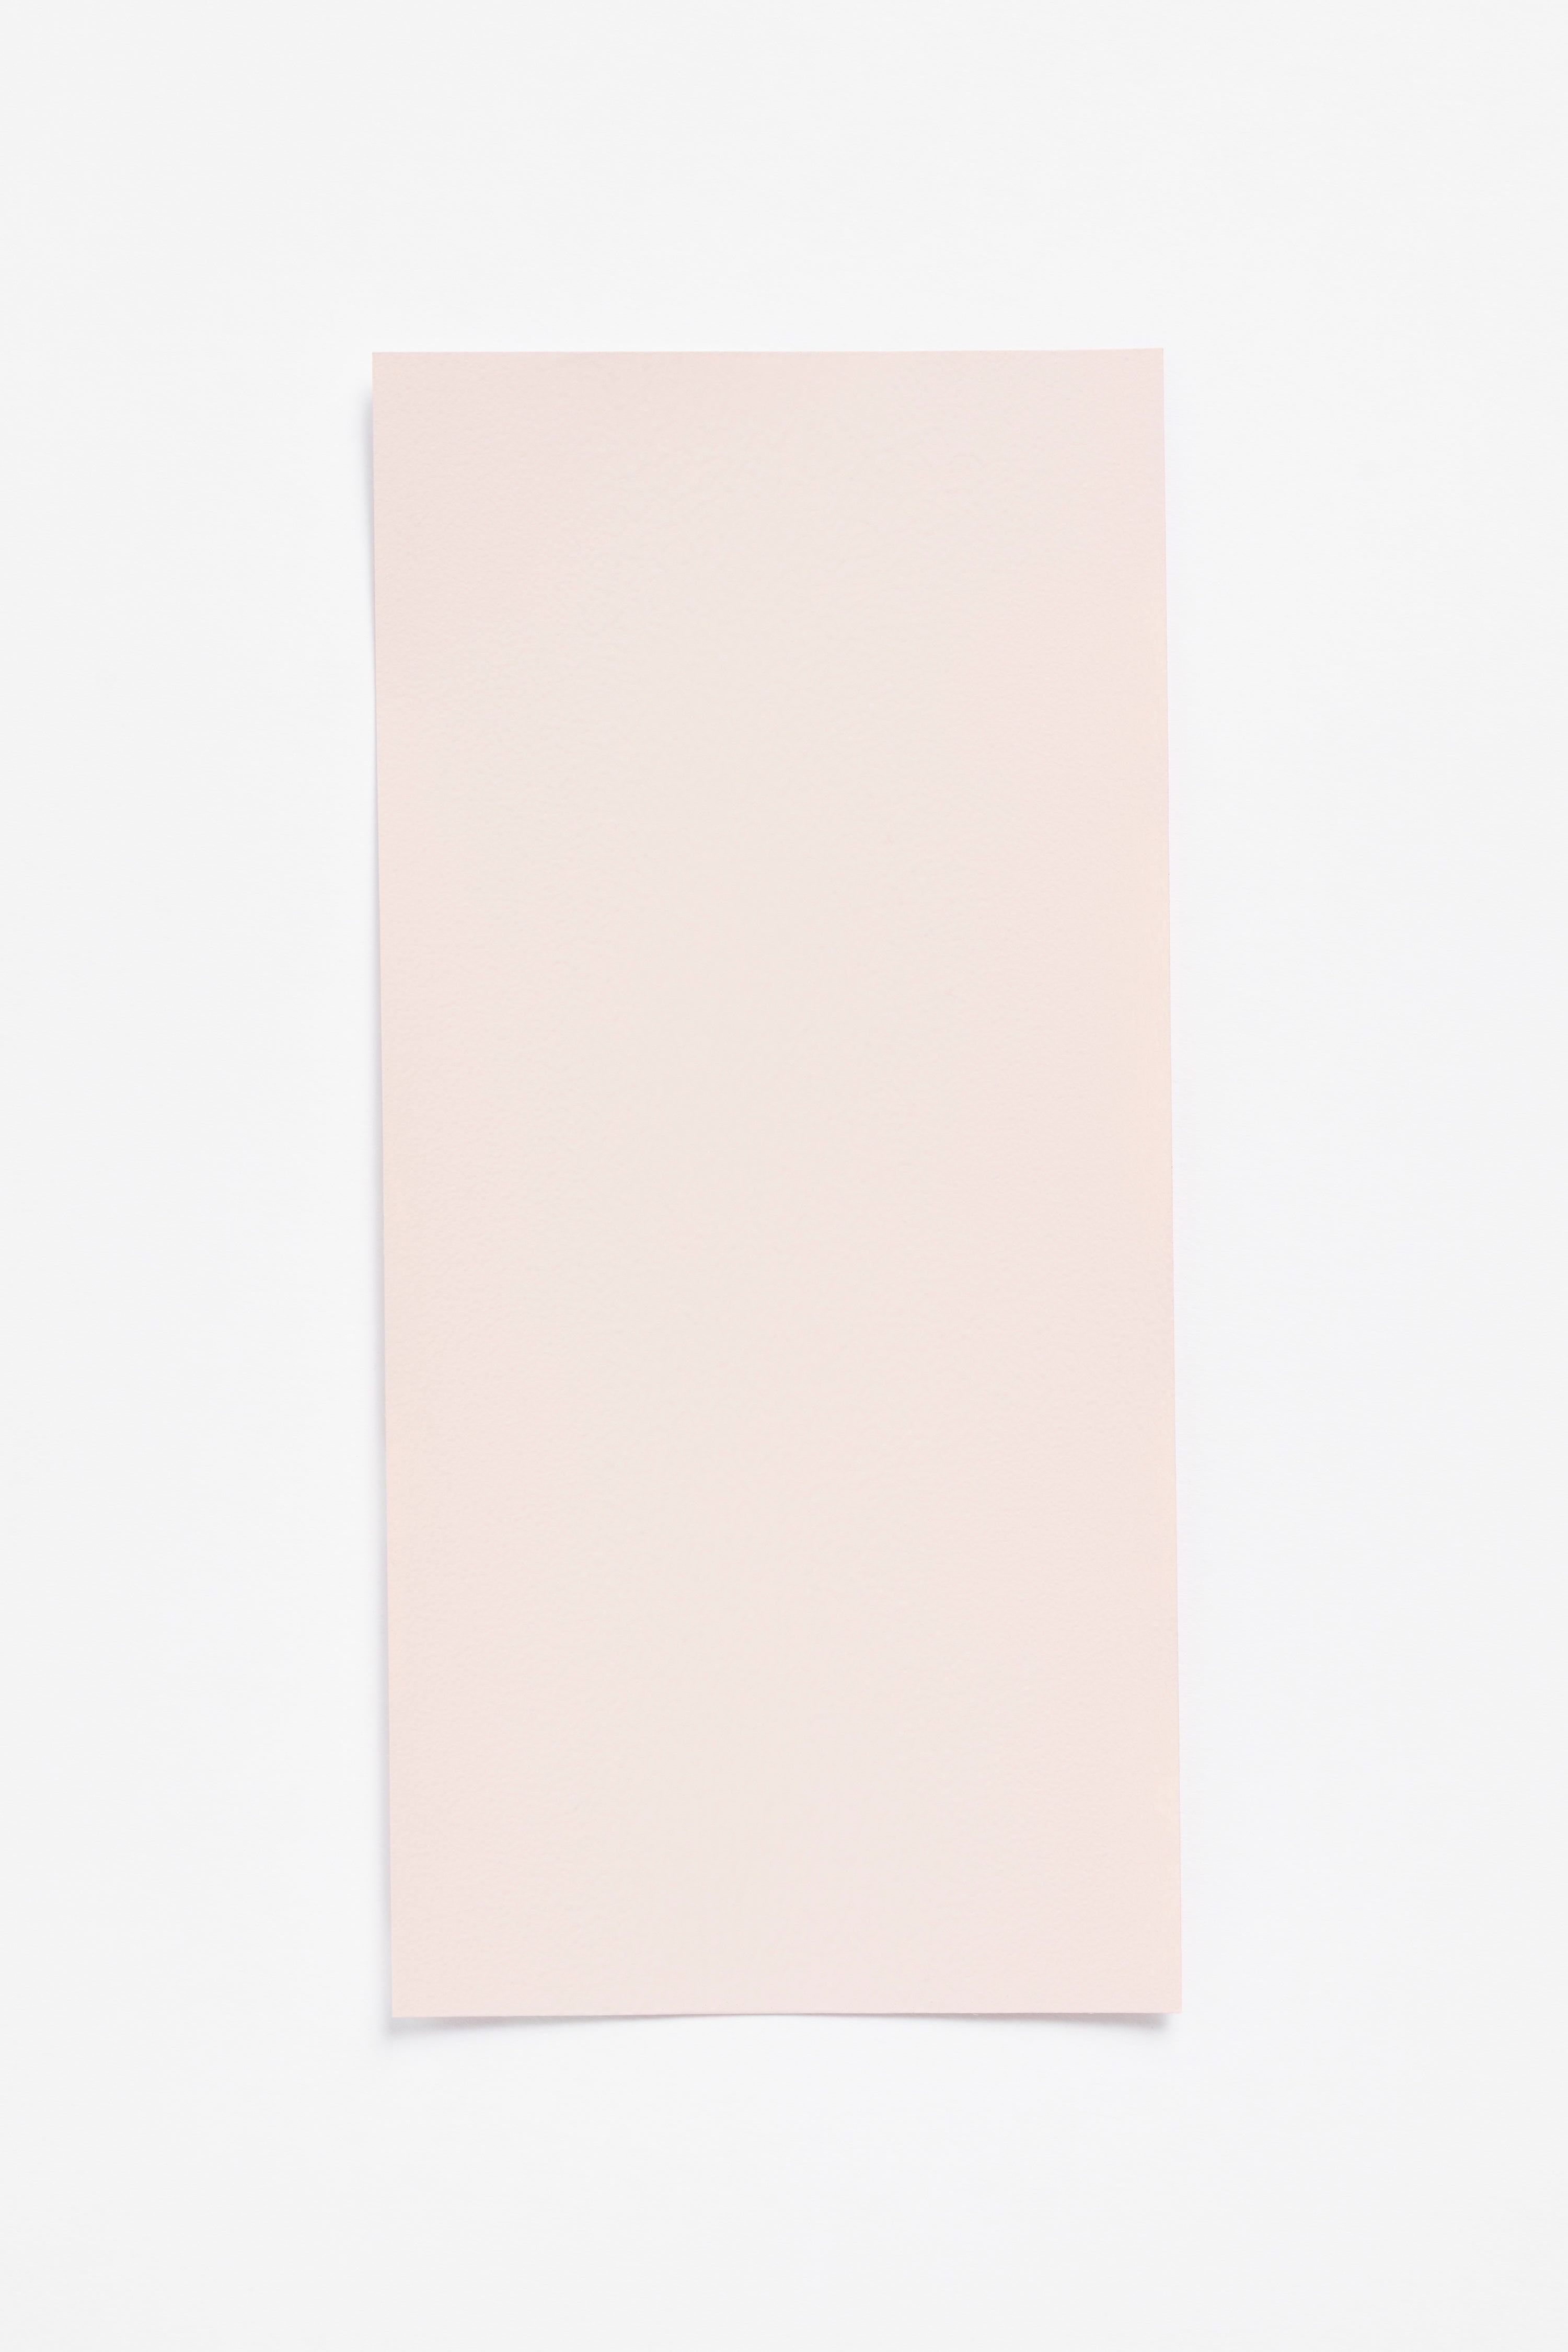 Rose — a paint colour developed by Ronan Bouroullec for Blēo